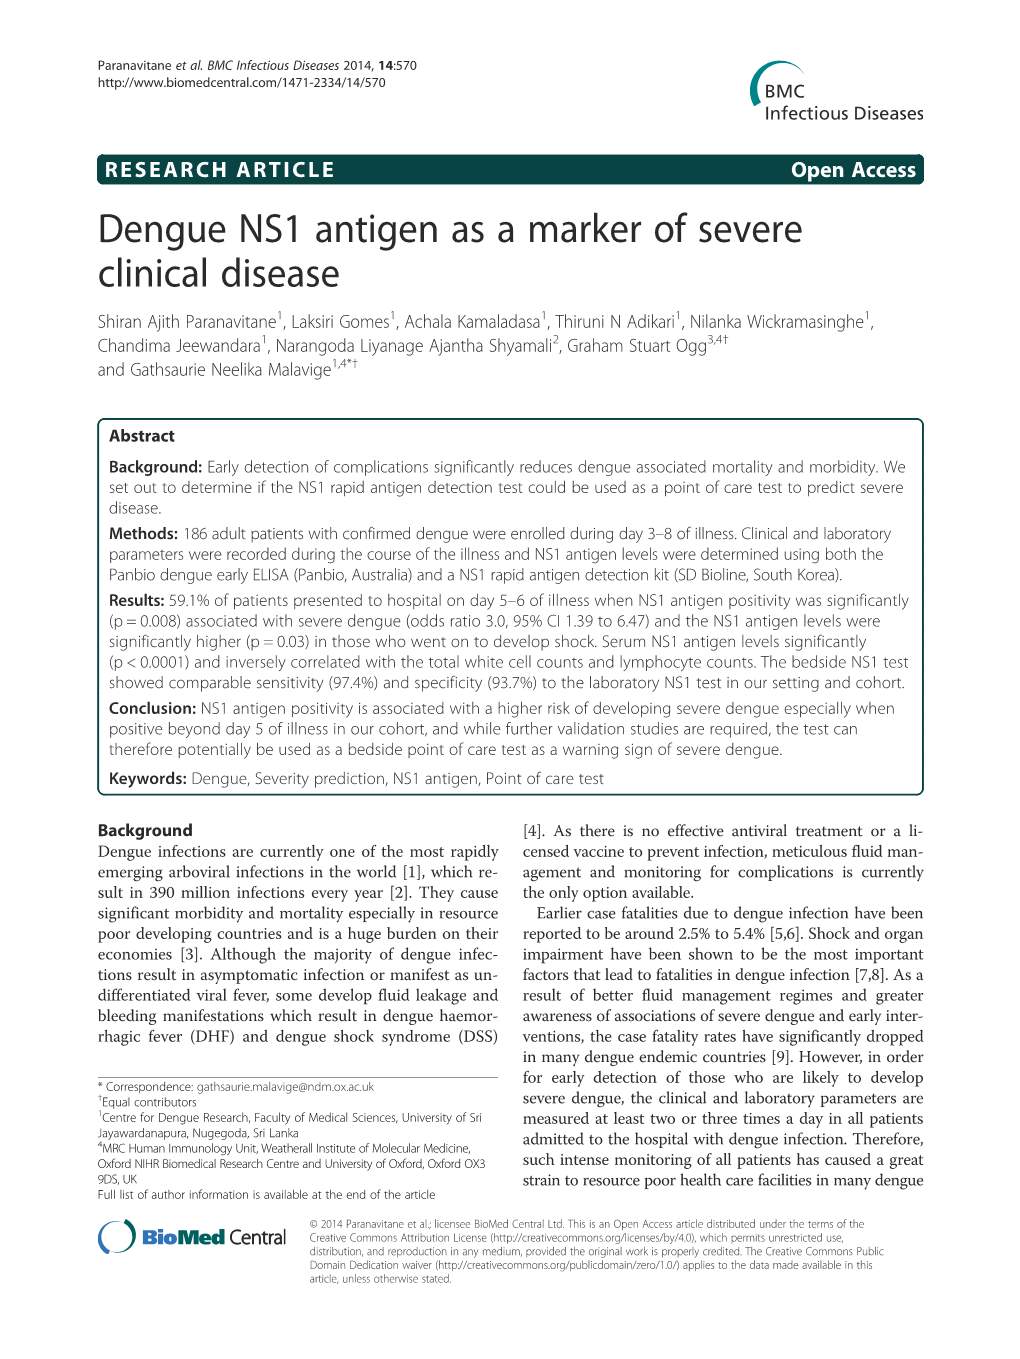 Dengue NS1 Antigen As a Marker of Severe Clinical Disease